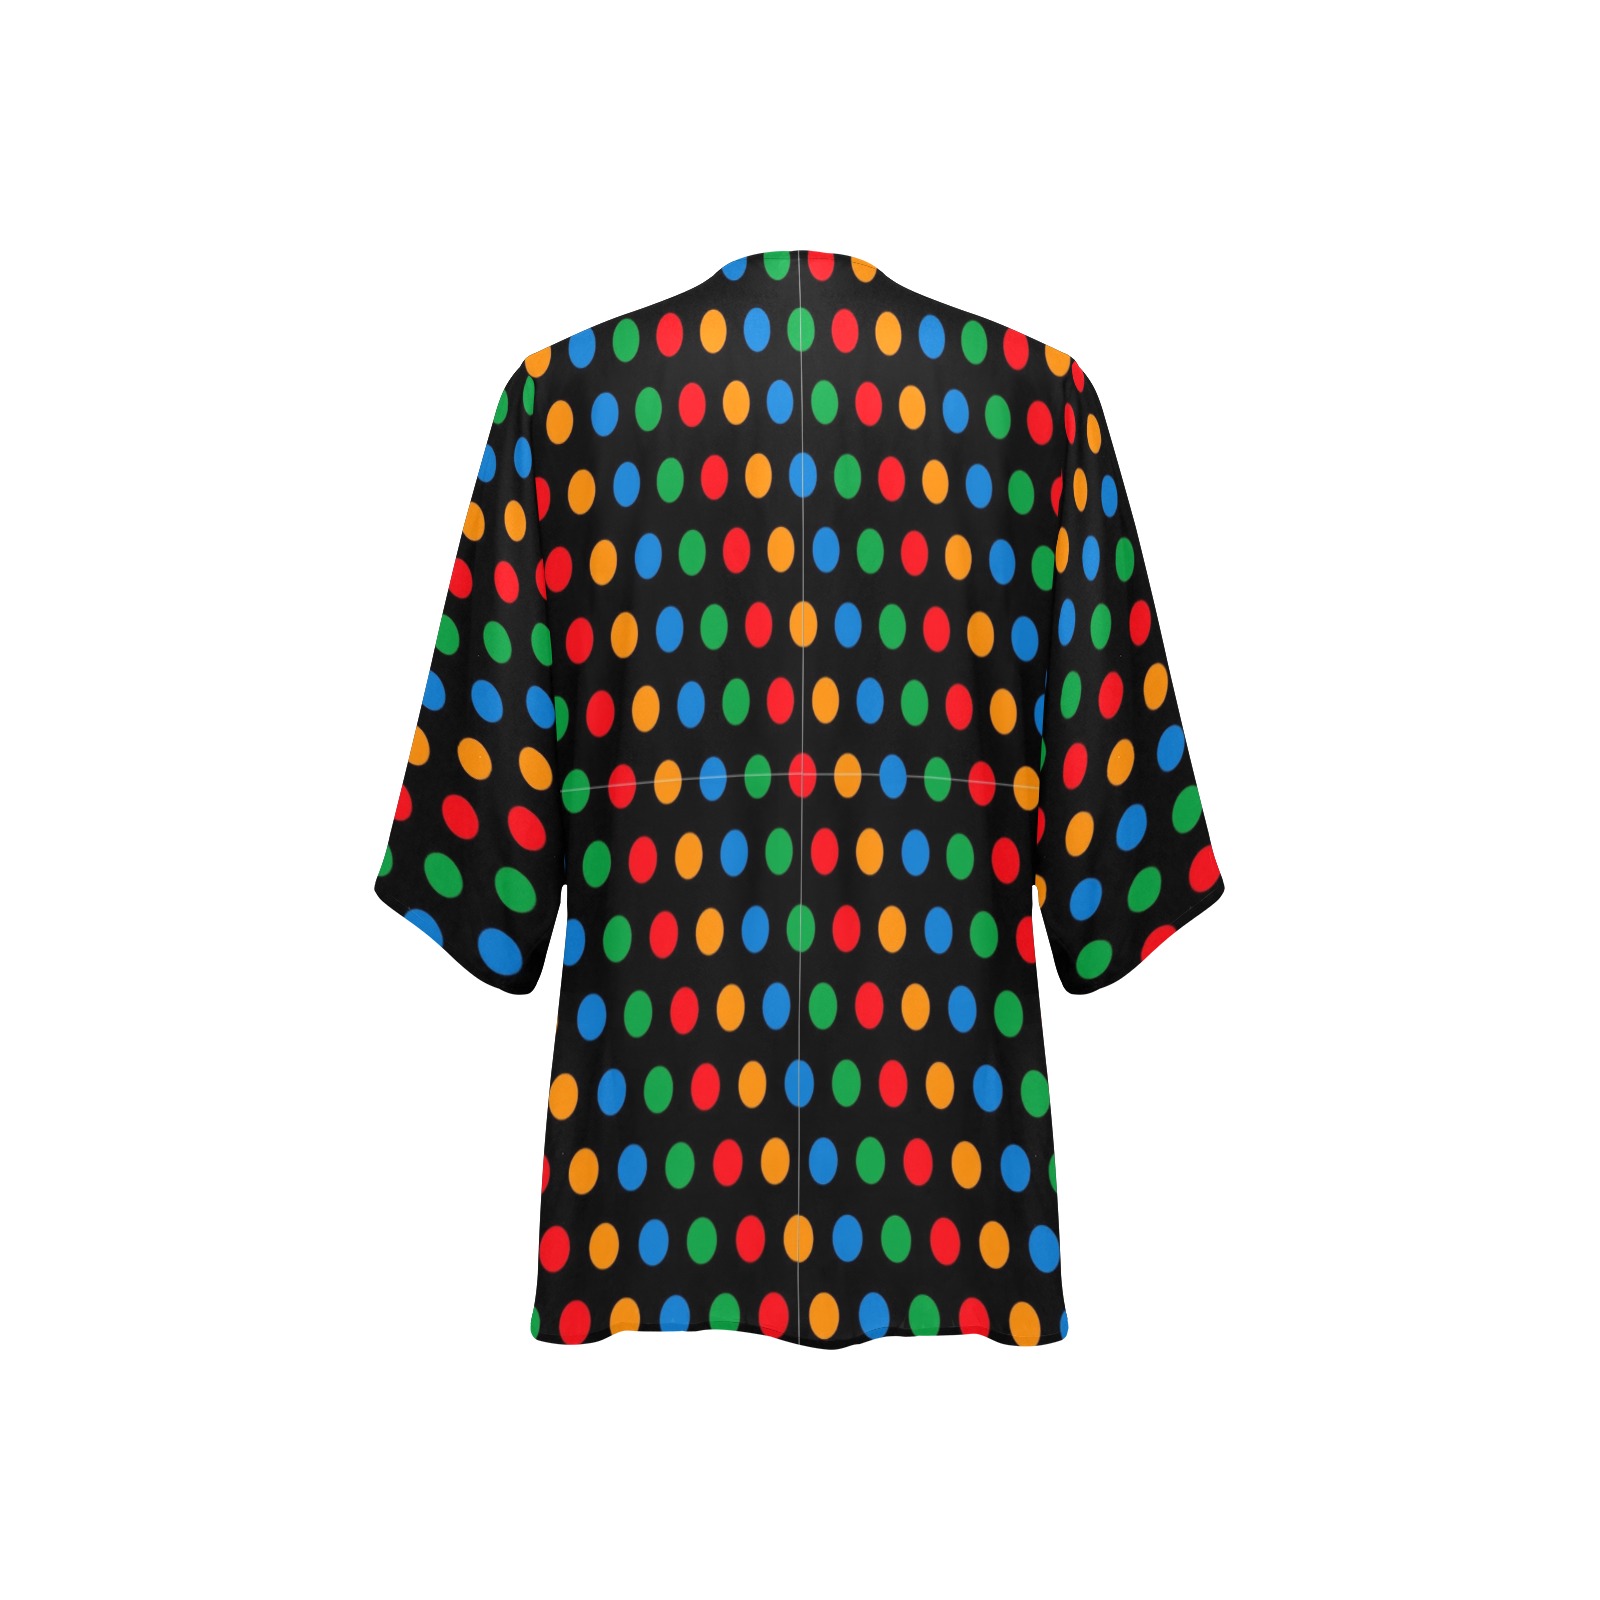 Prismatic Polka Dots on Black Background 1 GIANT Women's Kimono Chiffon Cover Ups (Model H51)